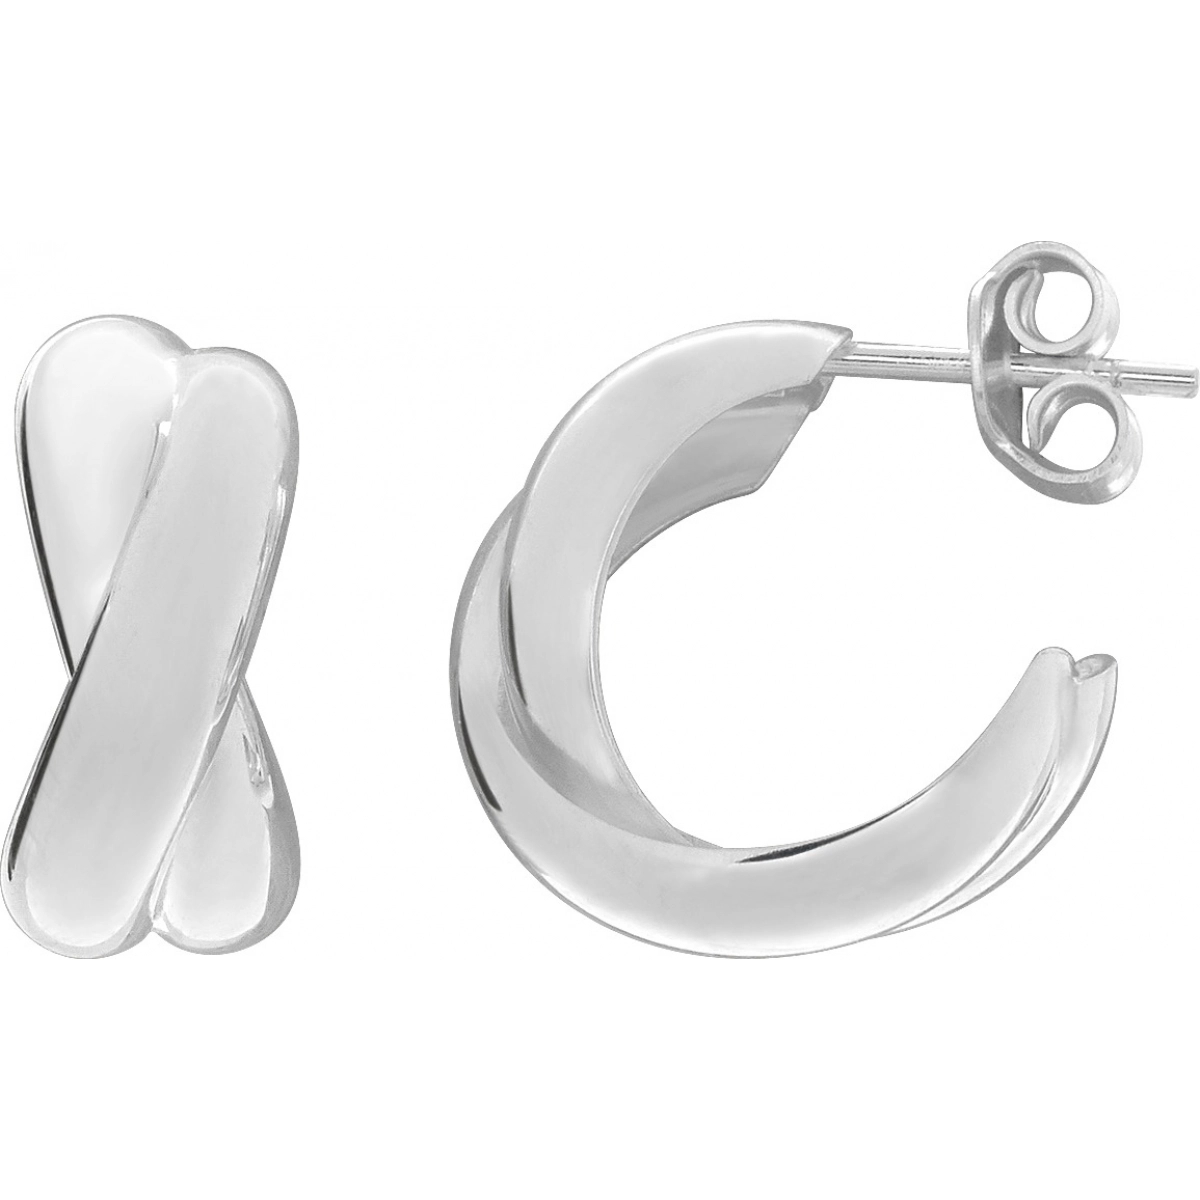 Earrings pair rh925 Silver  Lua Blanca  335608.0